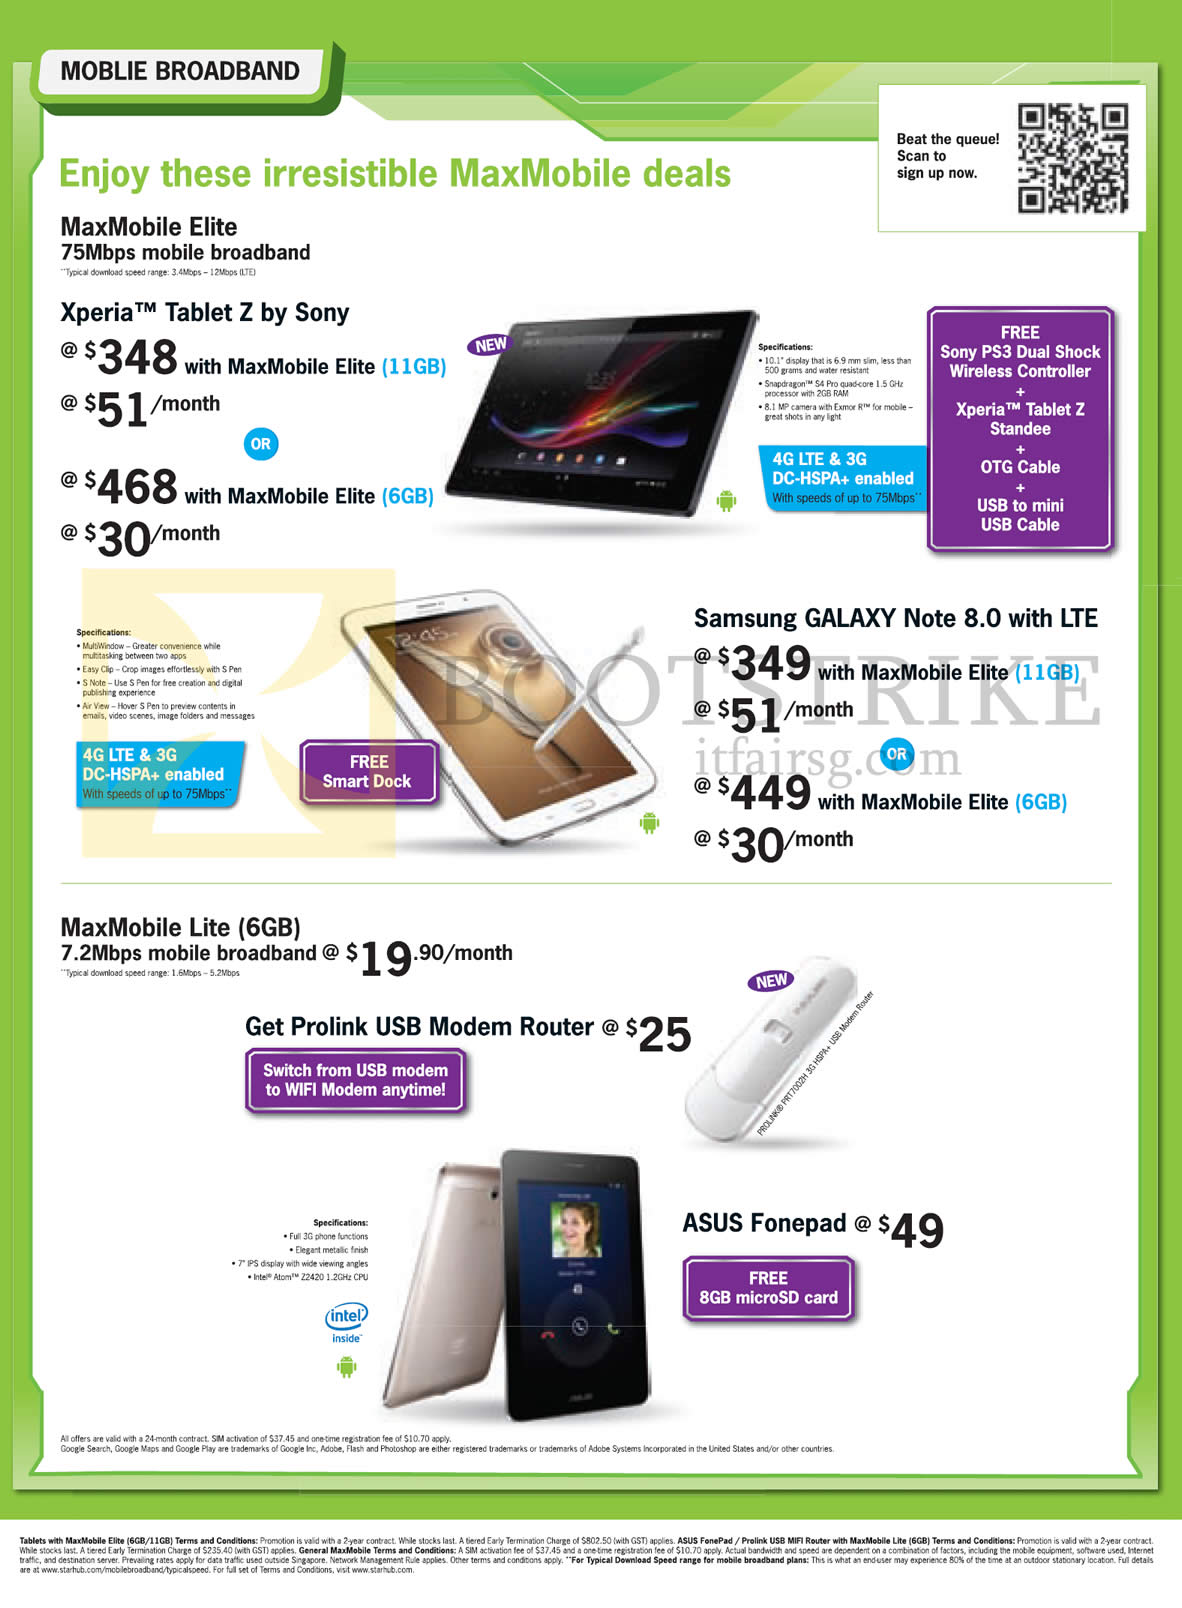 PC SHOW 2013 price list image brochure of Starhub Mobile Broadband MaxMobile Elite Sony Xperia Tablet Z, Samsung Galaxy Note 8.0, MaxMobilte Lite, ASUS Fonepad